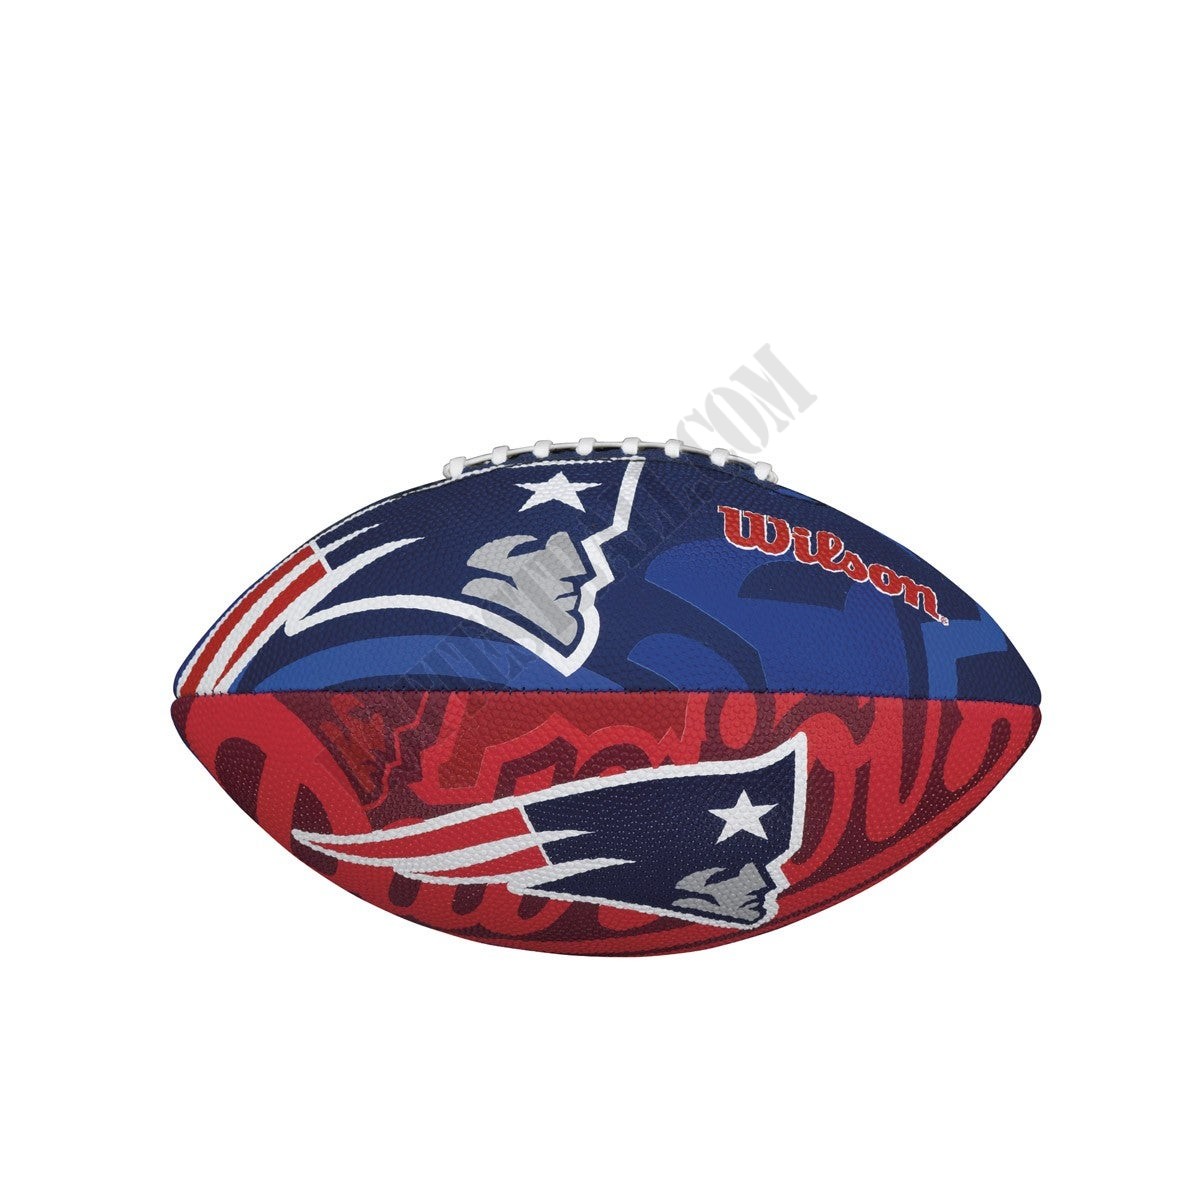 NFL Team Tailgate Football - New England Patriots ● Wilson Promotions - NFL Team Tailgate Football - New England Patriots ● Wilson Promotions